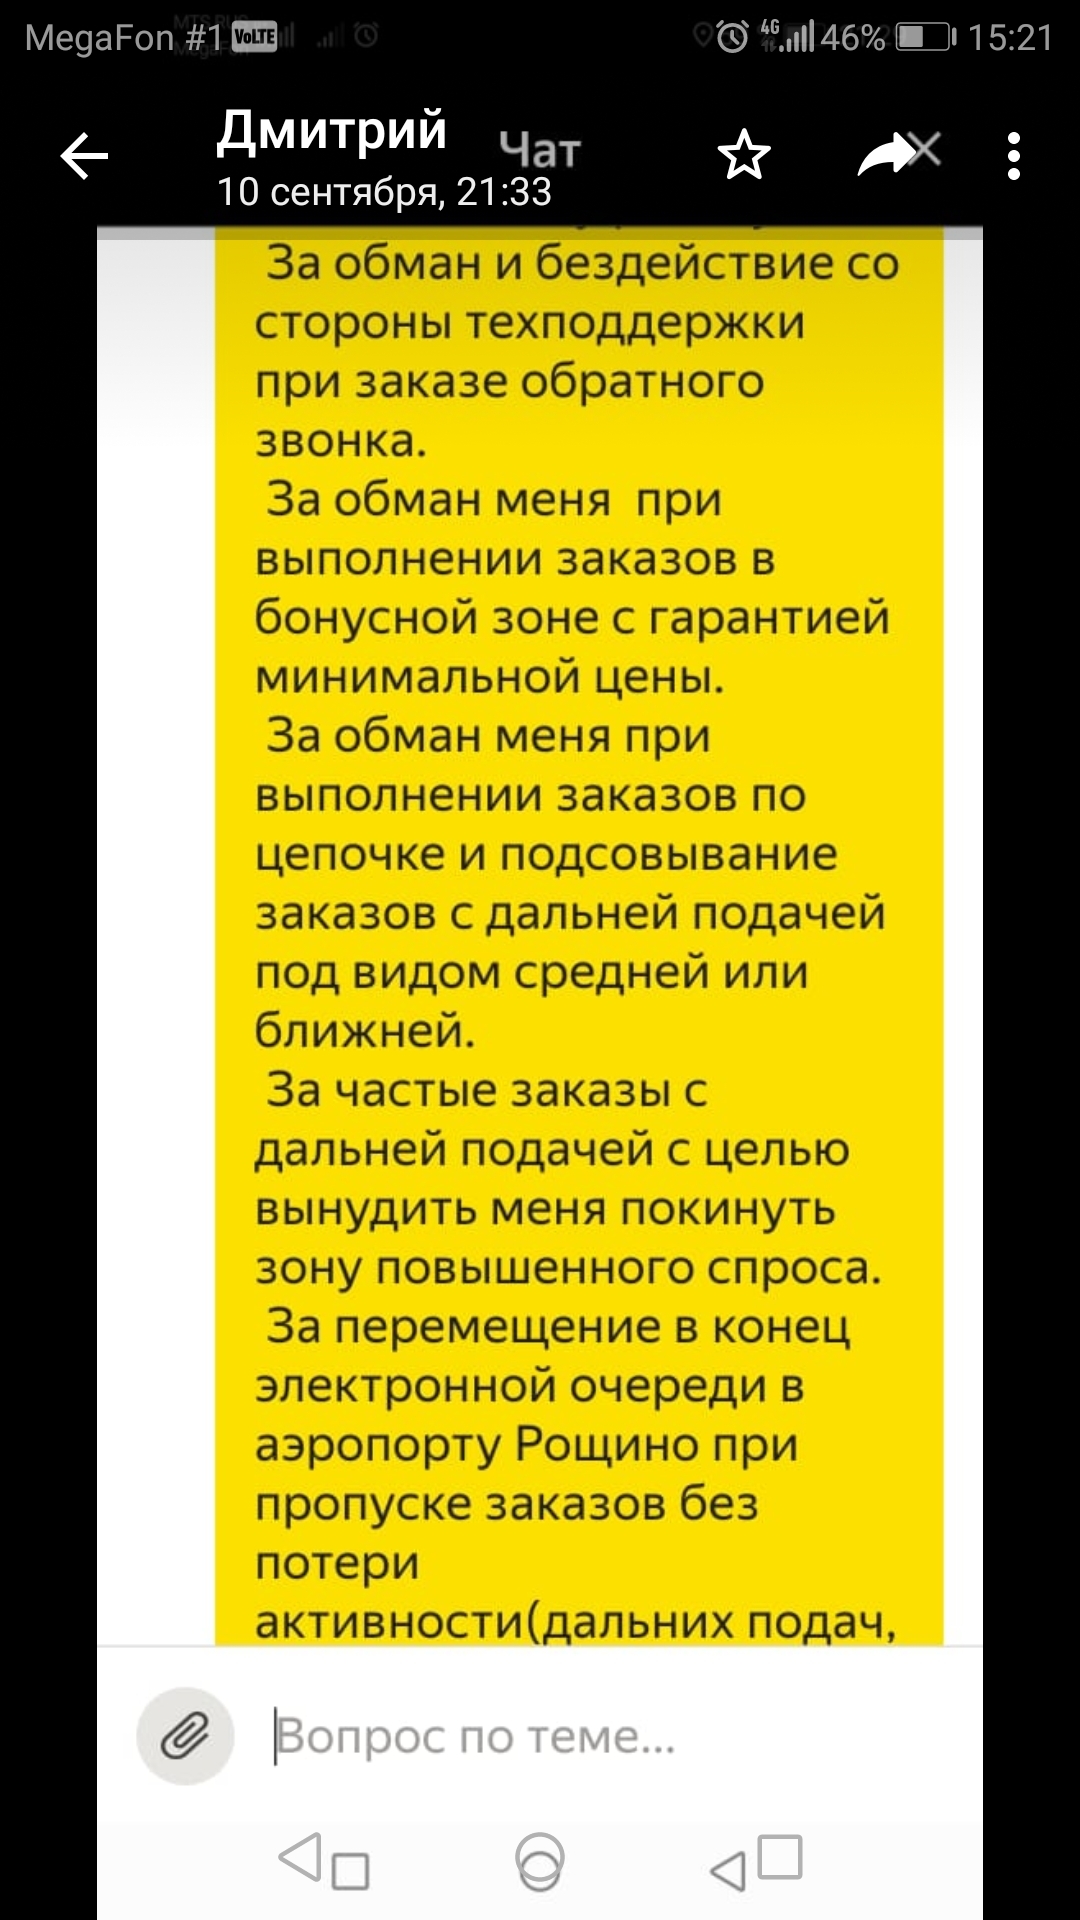 Contacting Yandex taxi technical support - Yandex Taxi, Screenshot, Indignation, Deception, Longpost